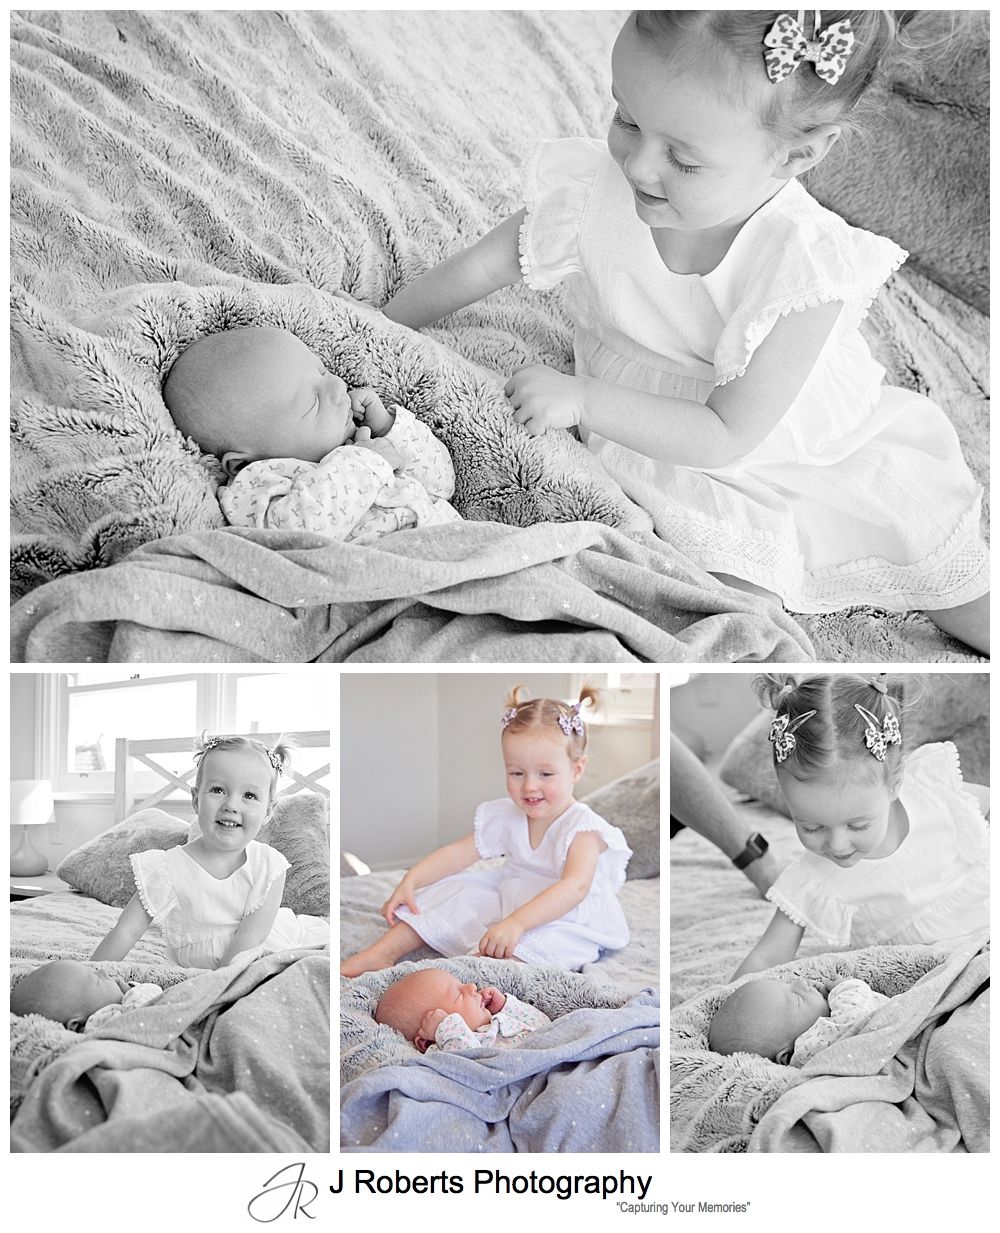 Newborn Baby Portrait Photography Sydney Baby Alice and Big Sister Jess